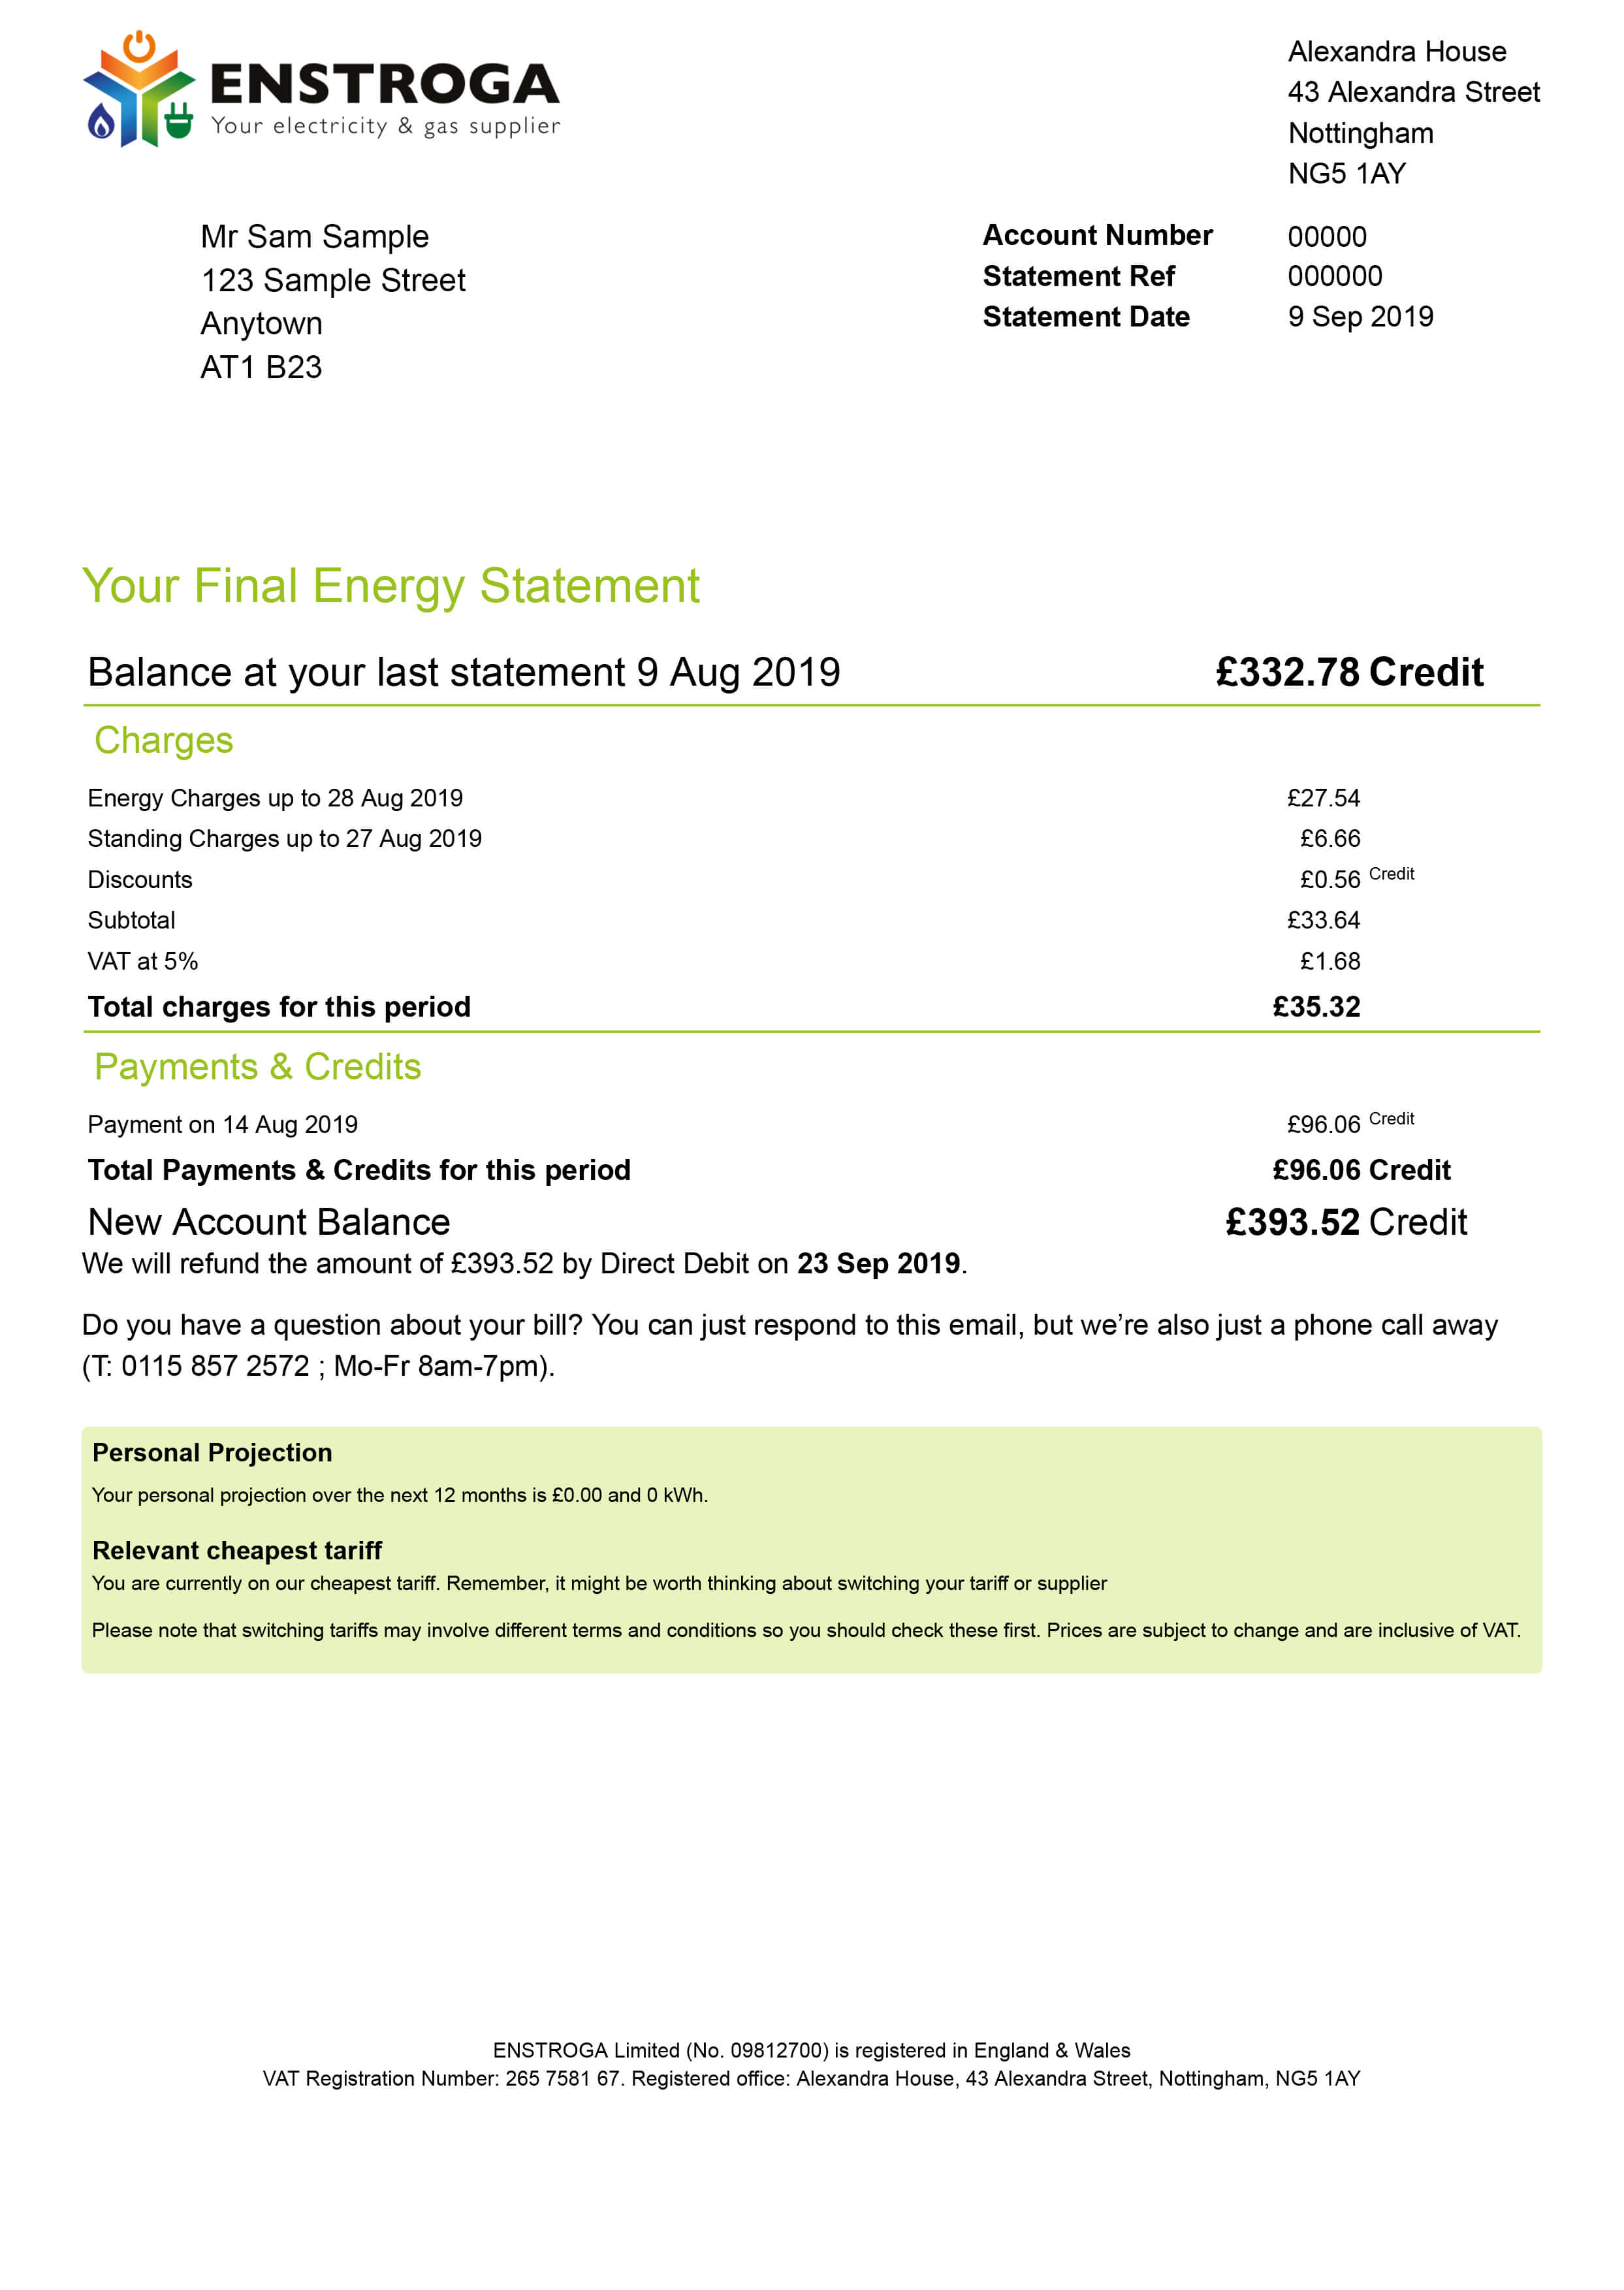 My energy bill - ENSTROGA UK